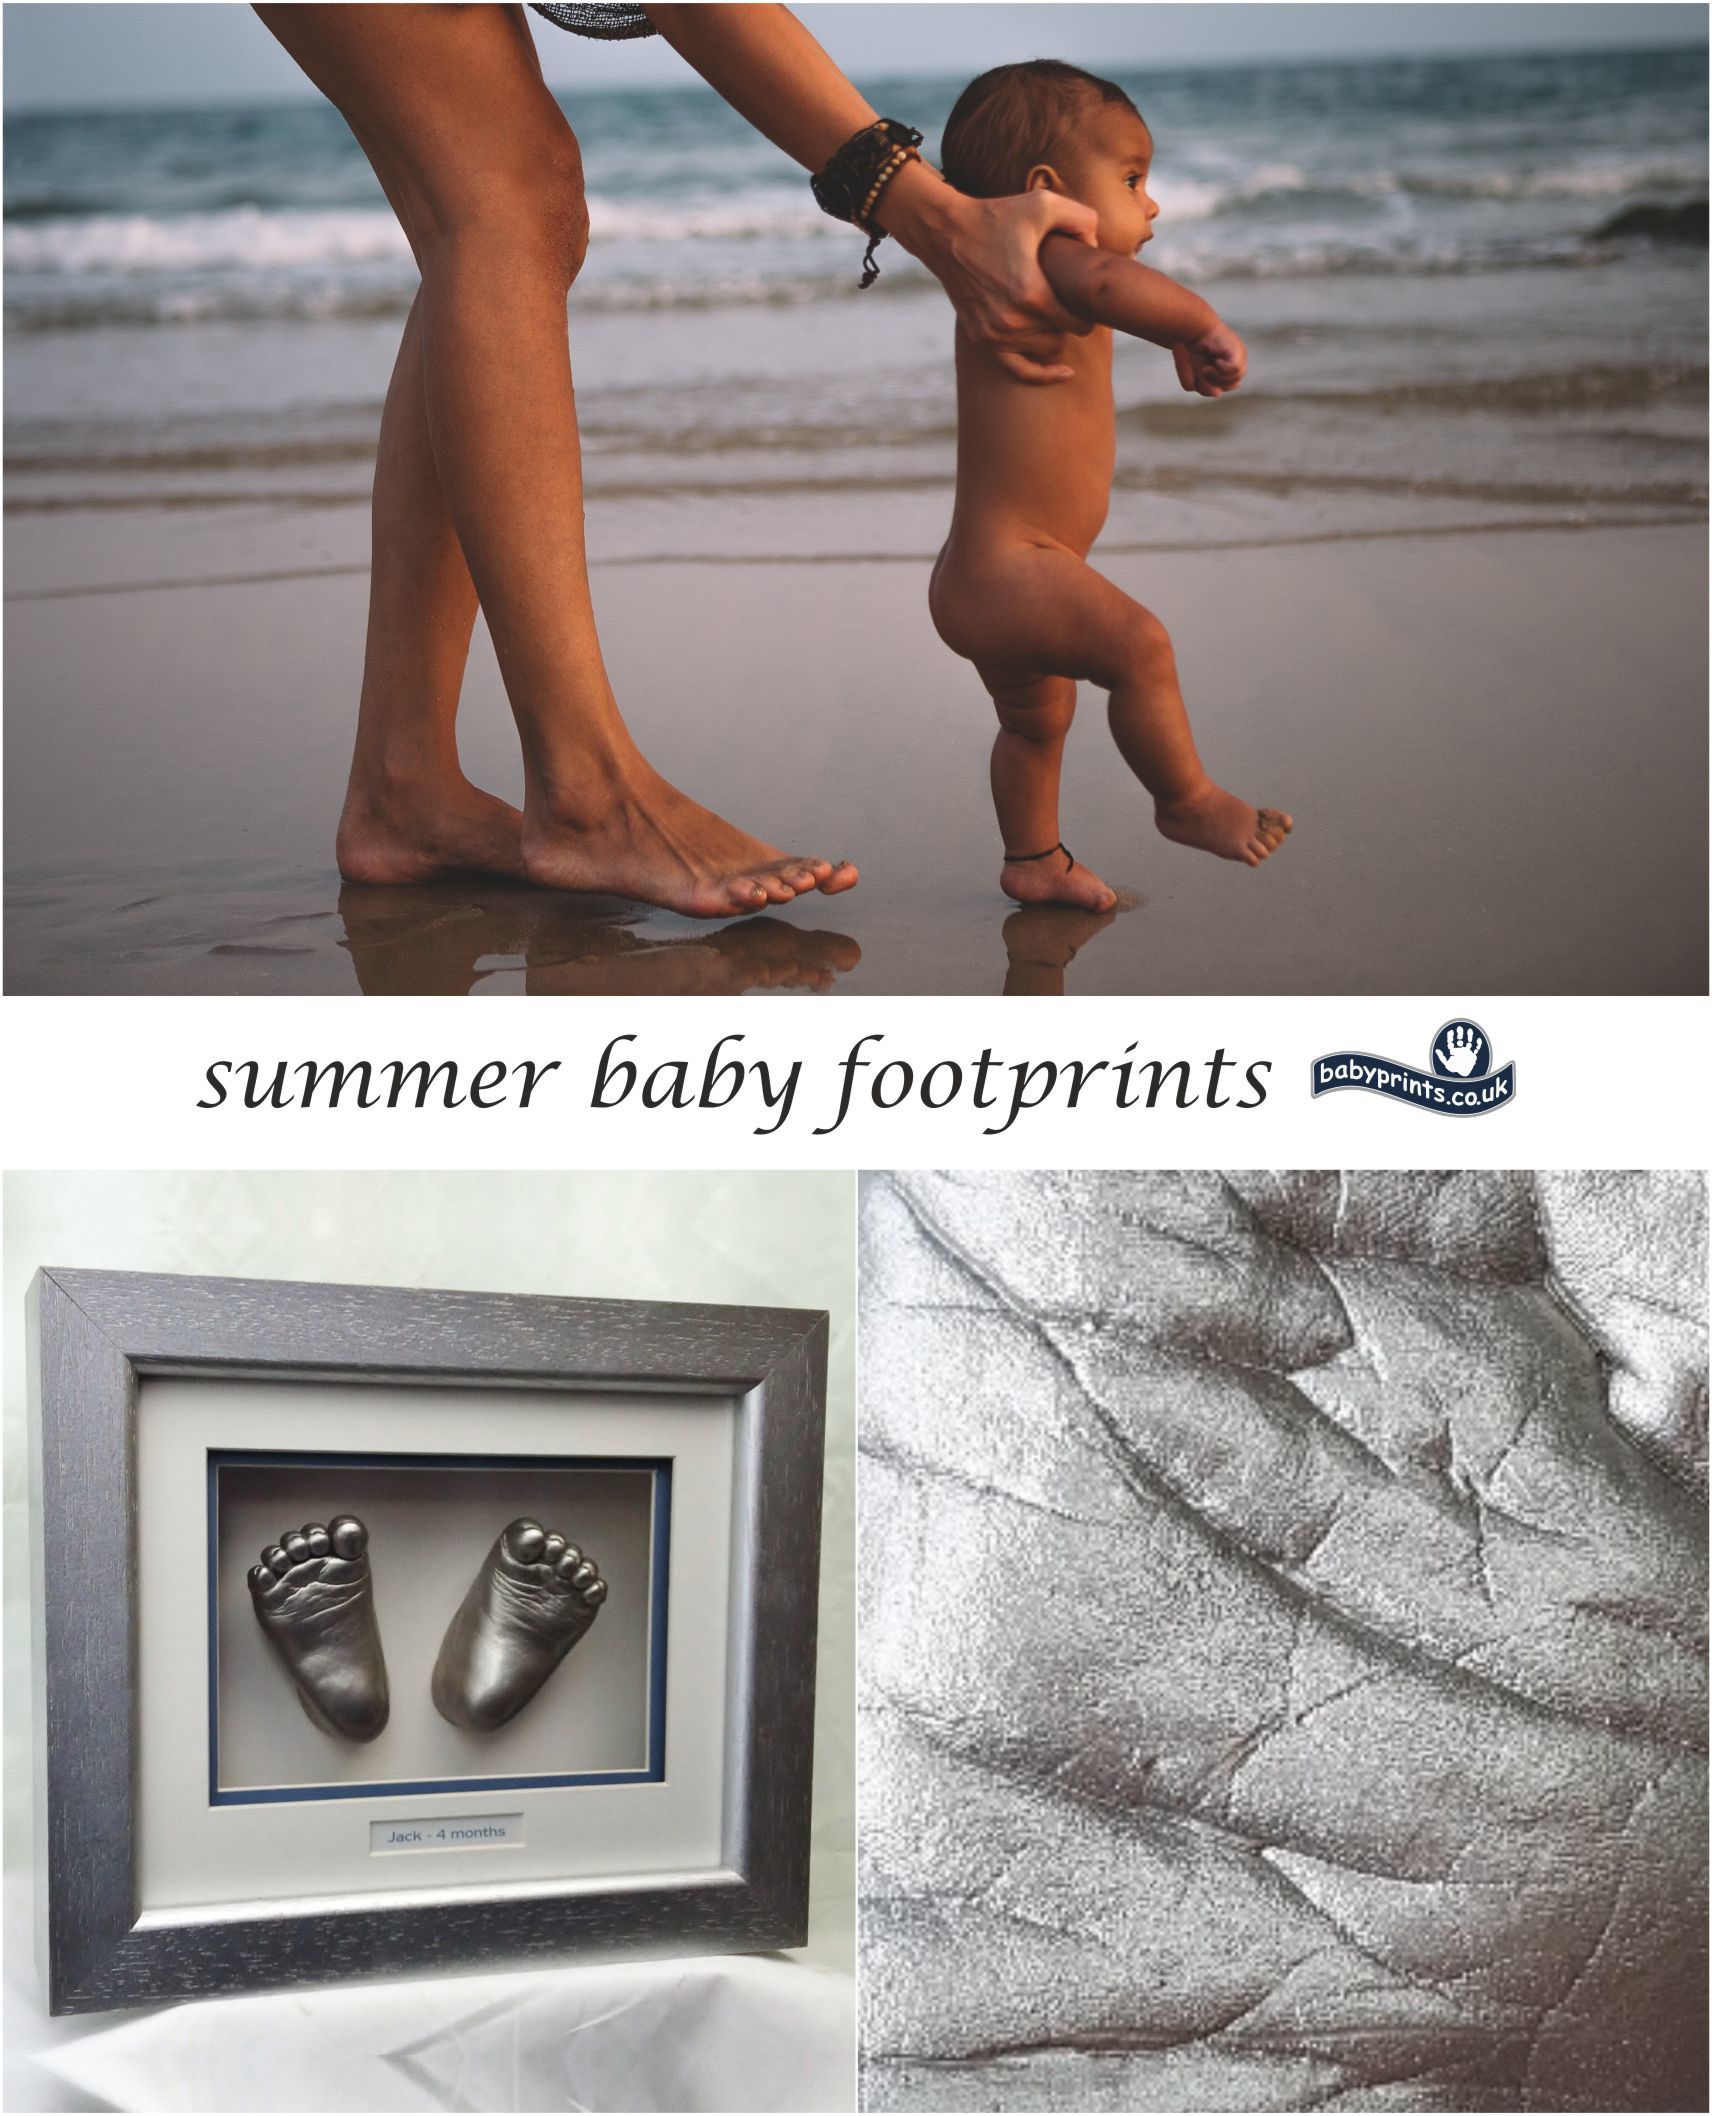 Summer baby footprints